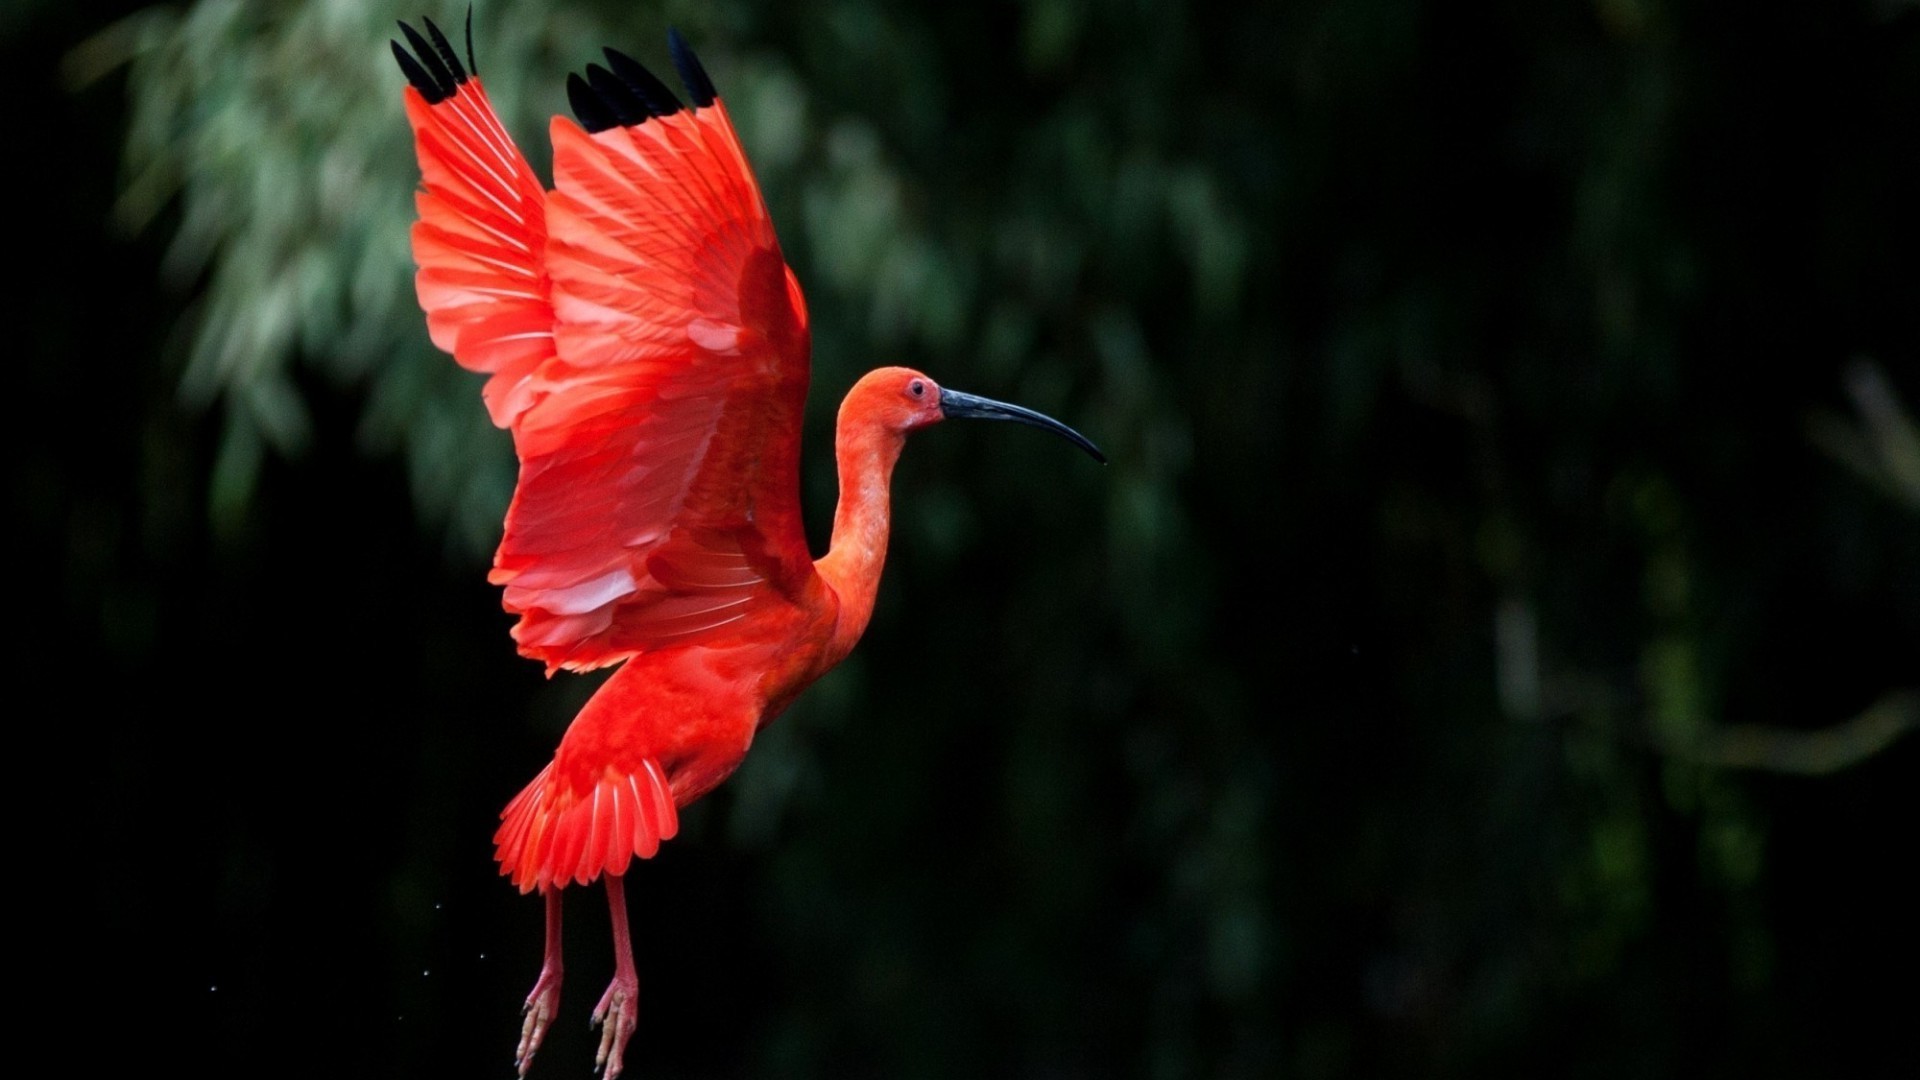 animals bird wildlife nature outdoors tropical feather wild exotic